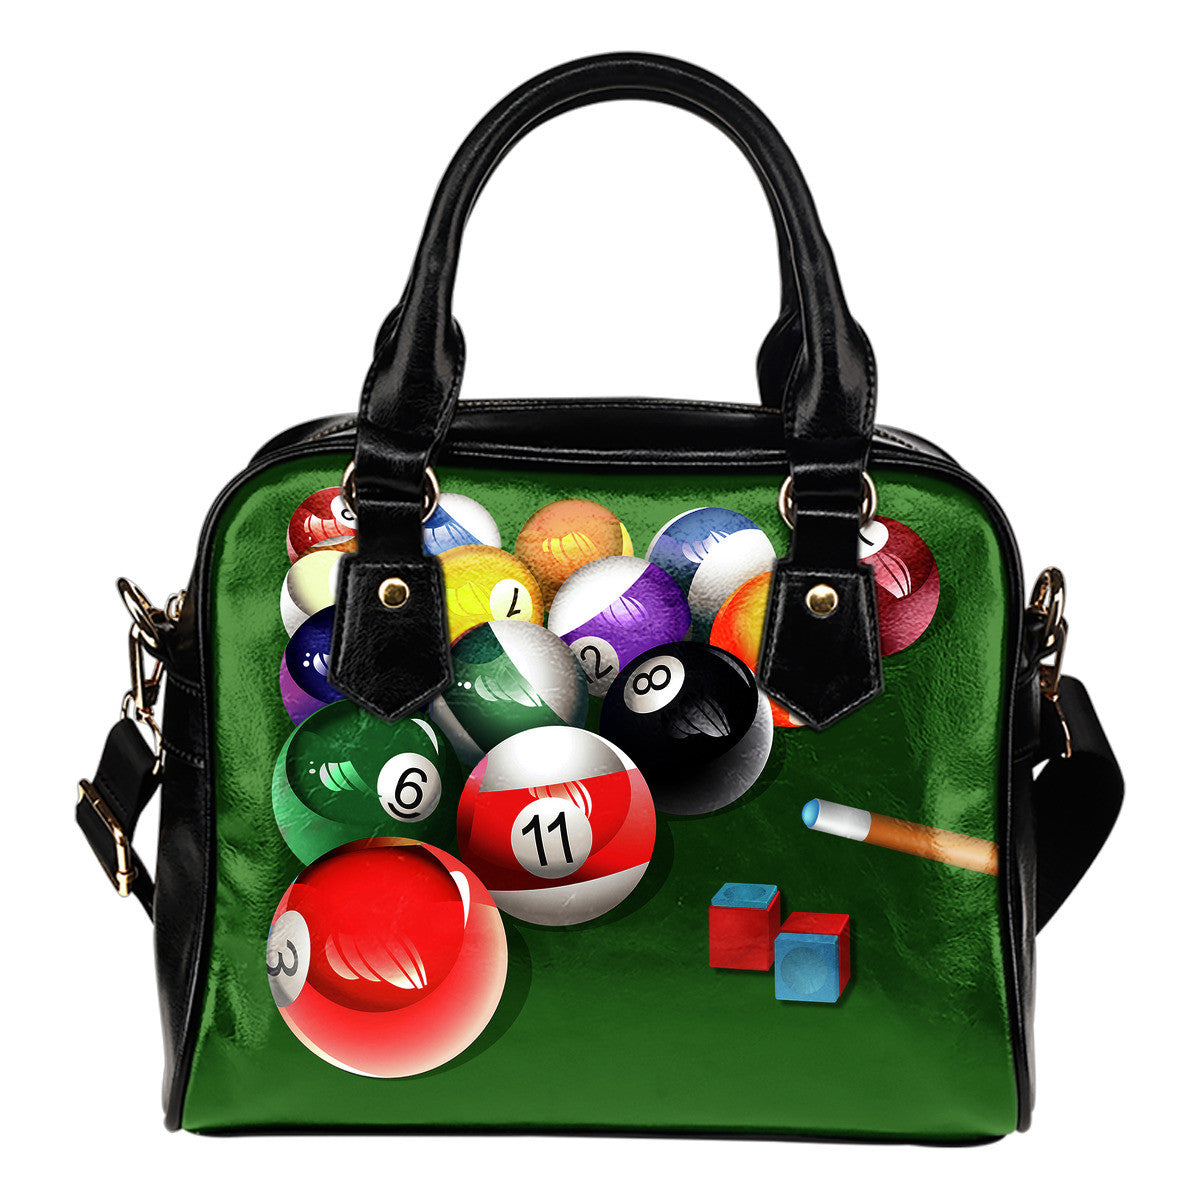 Billiards Handbag